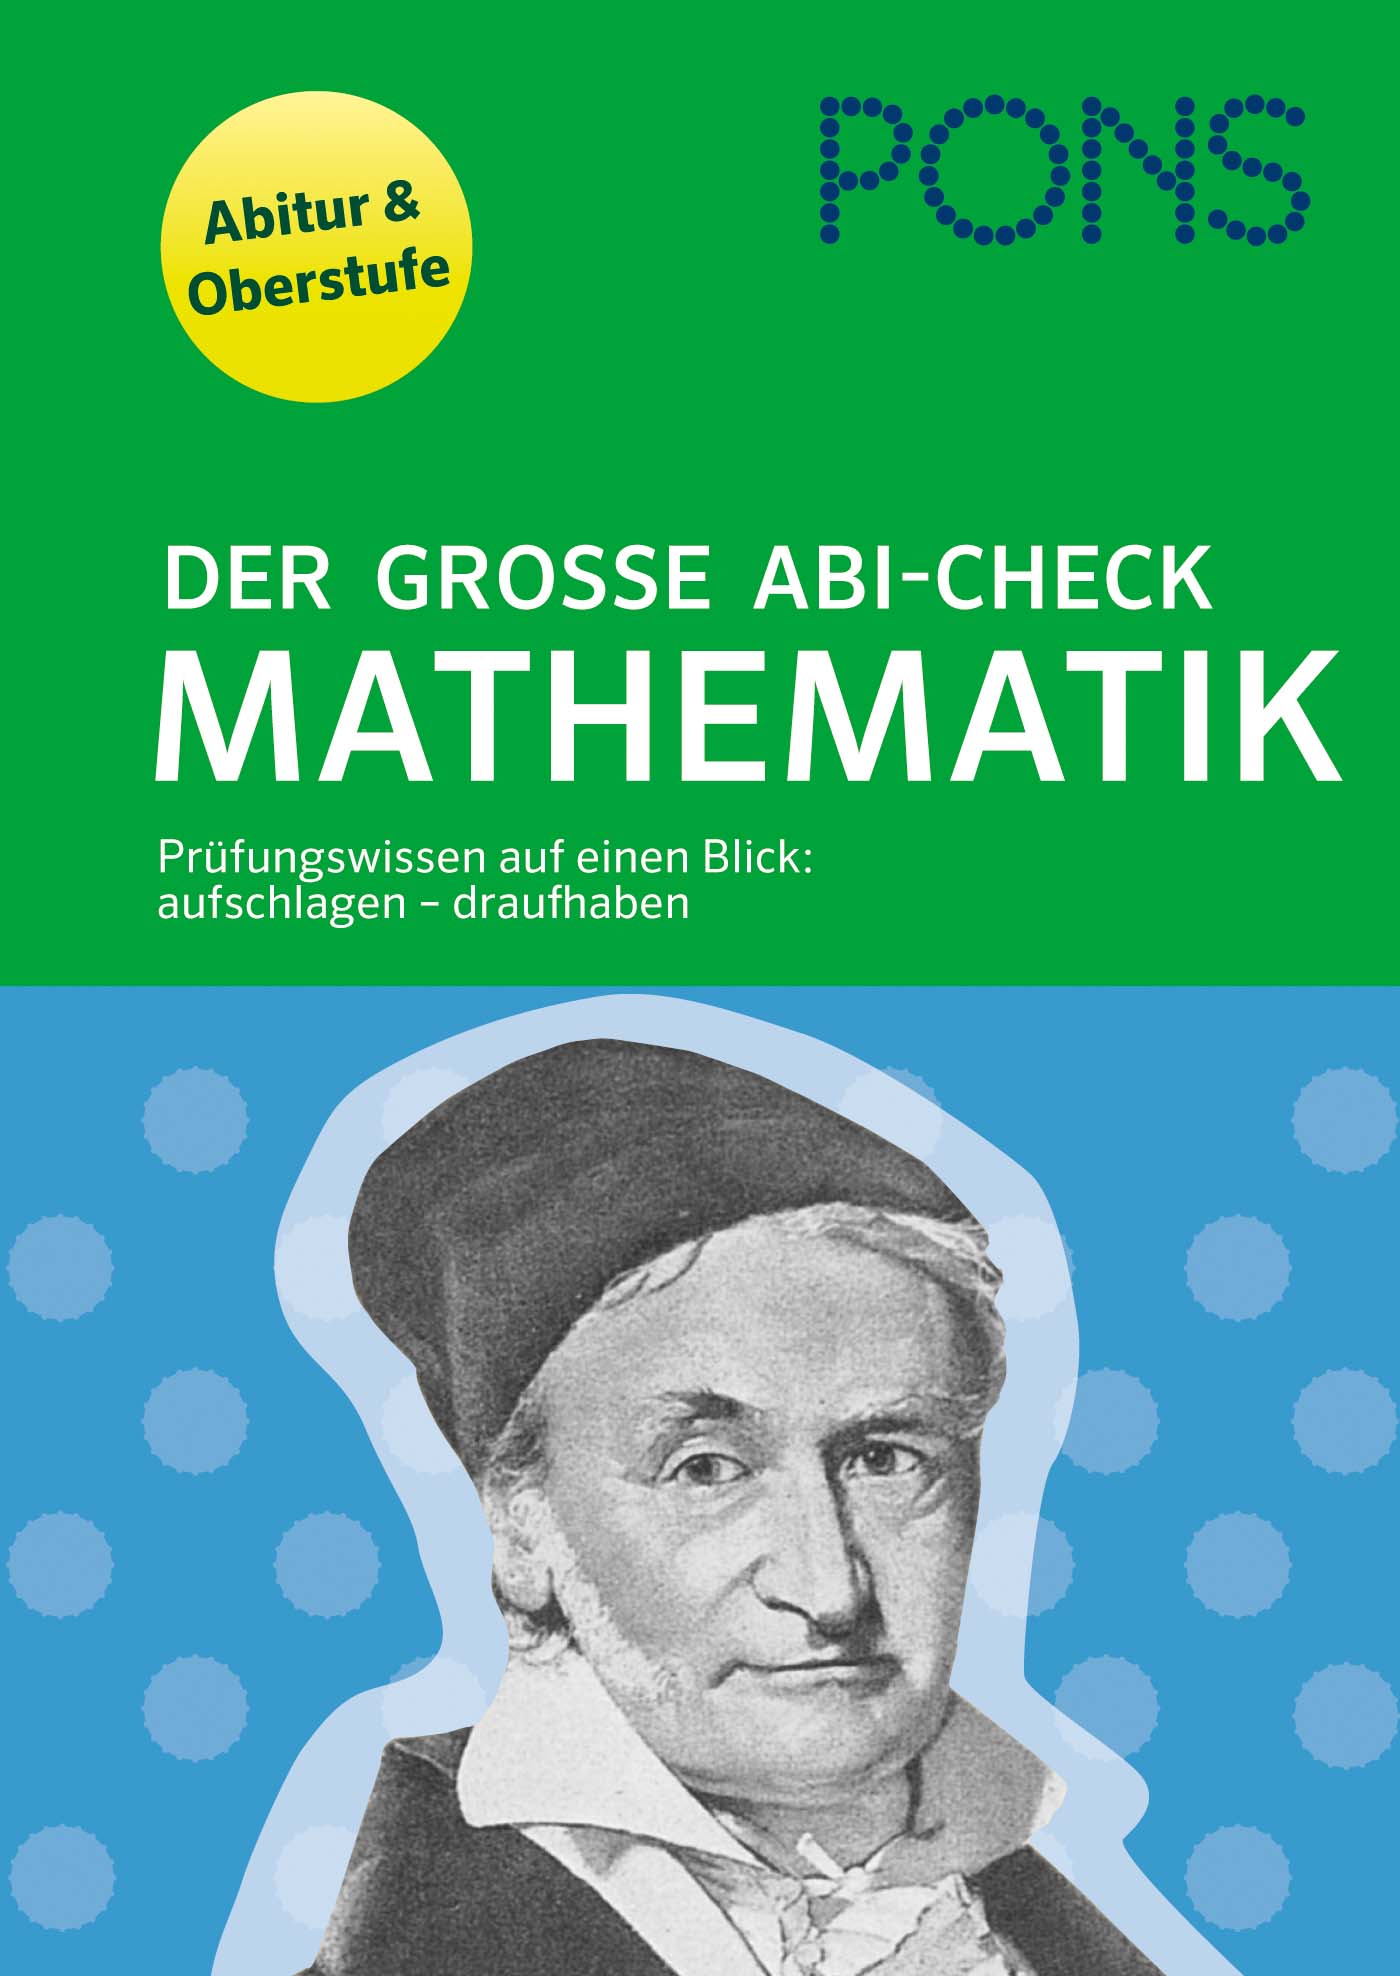 PONS Der große Abi-Check Mathematik  - Photo 1/1